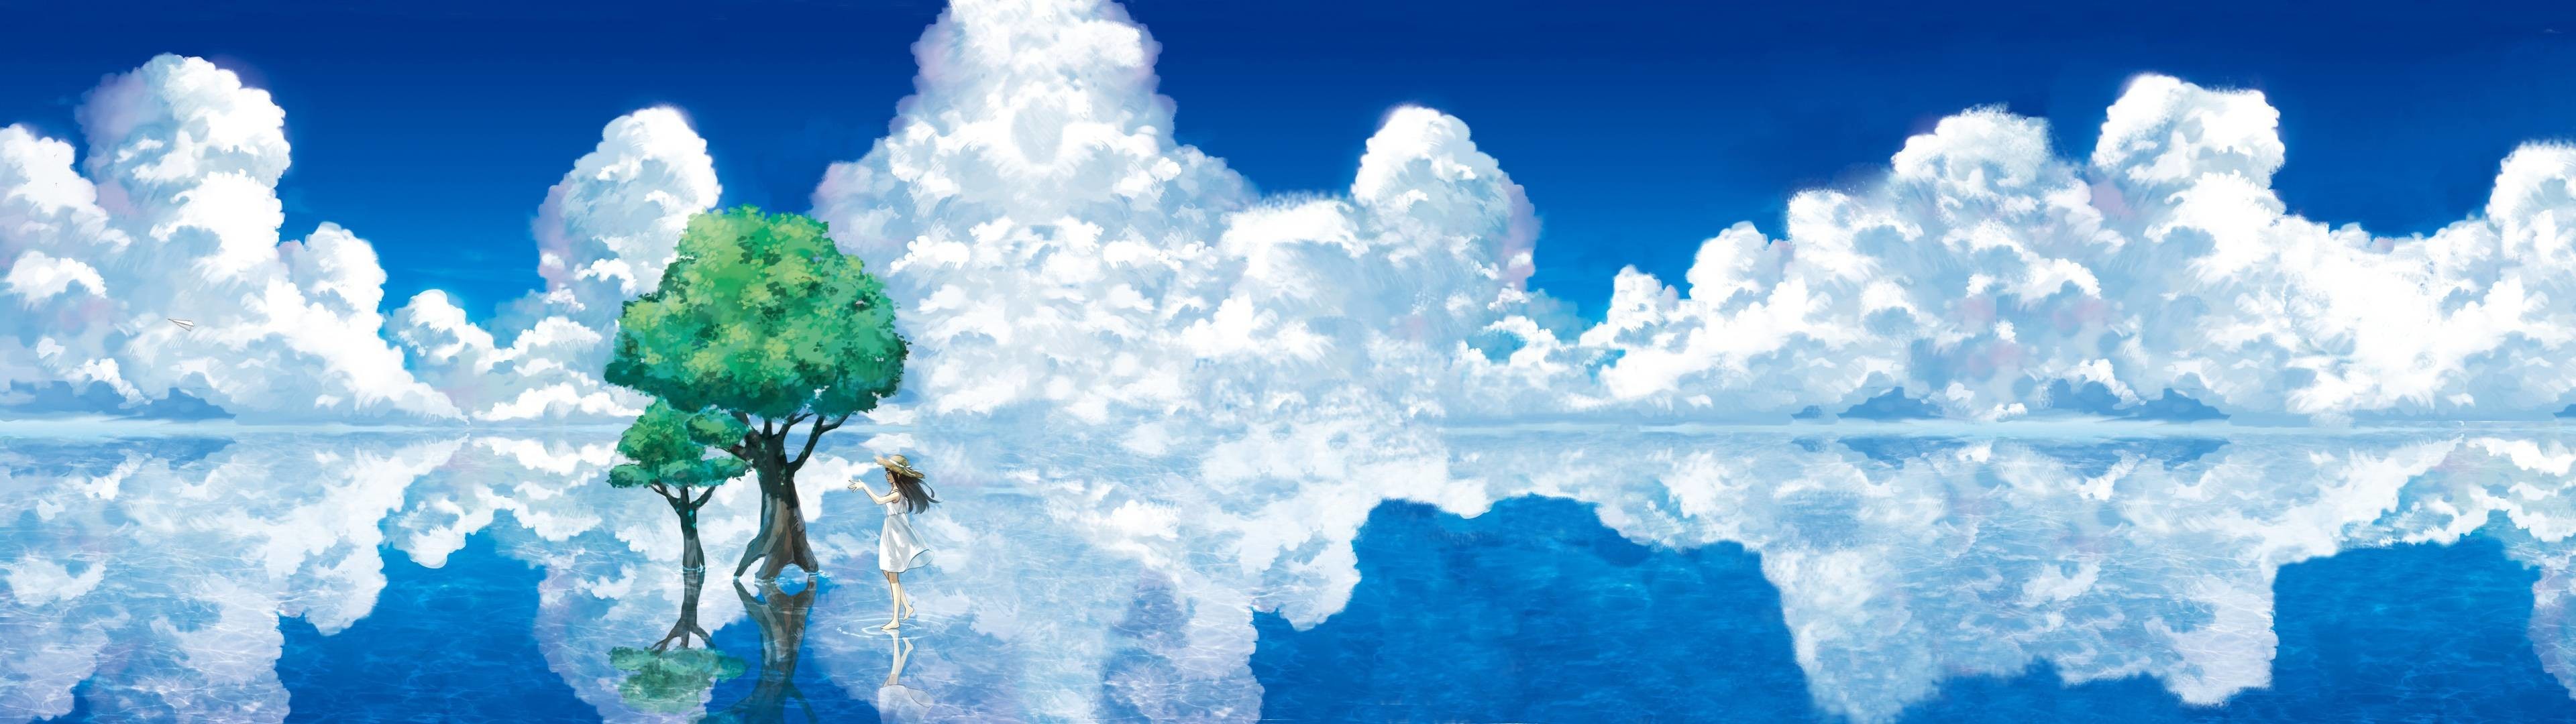 3840x1080 Studio Ghibli Dual Monitor Wallpaper Dump - Album on Imgur